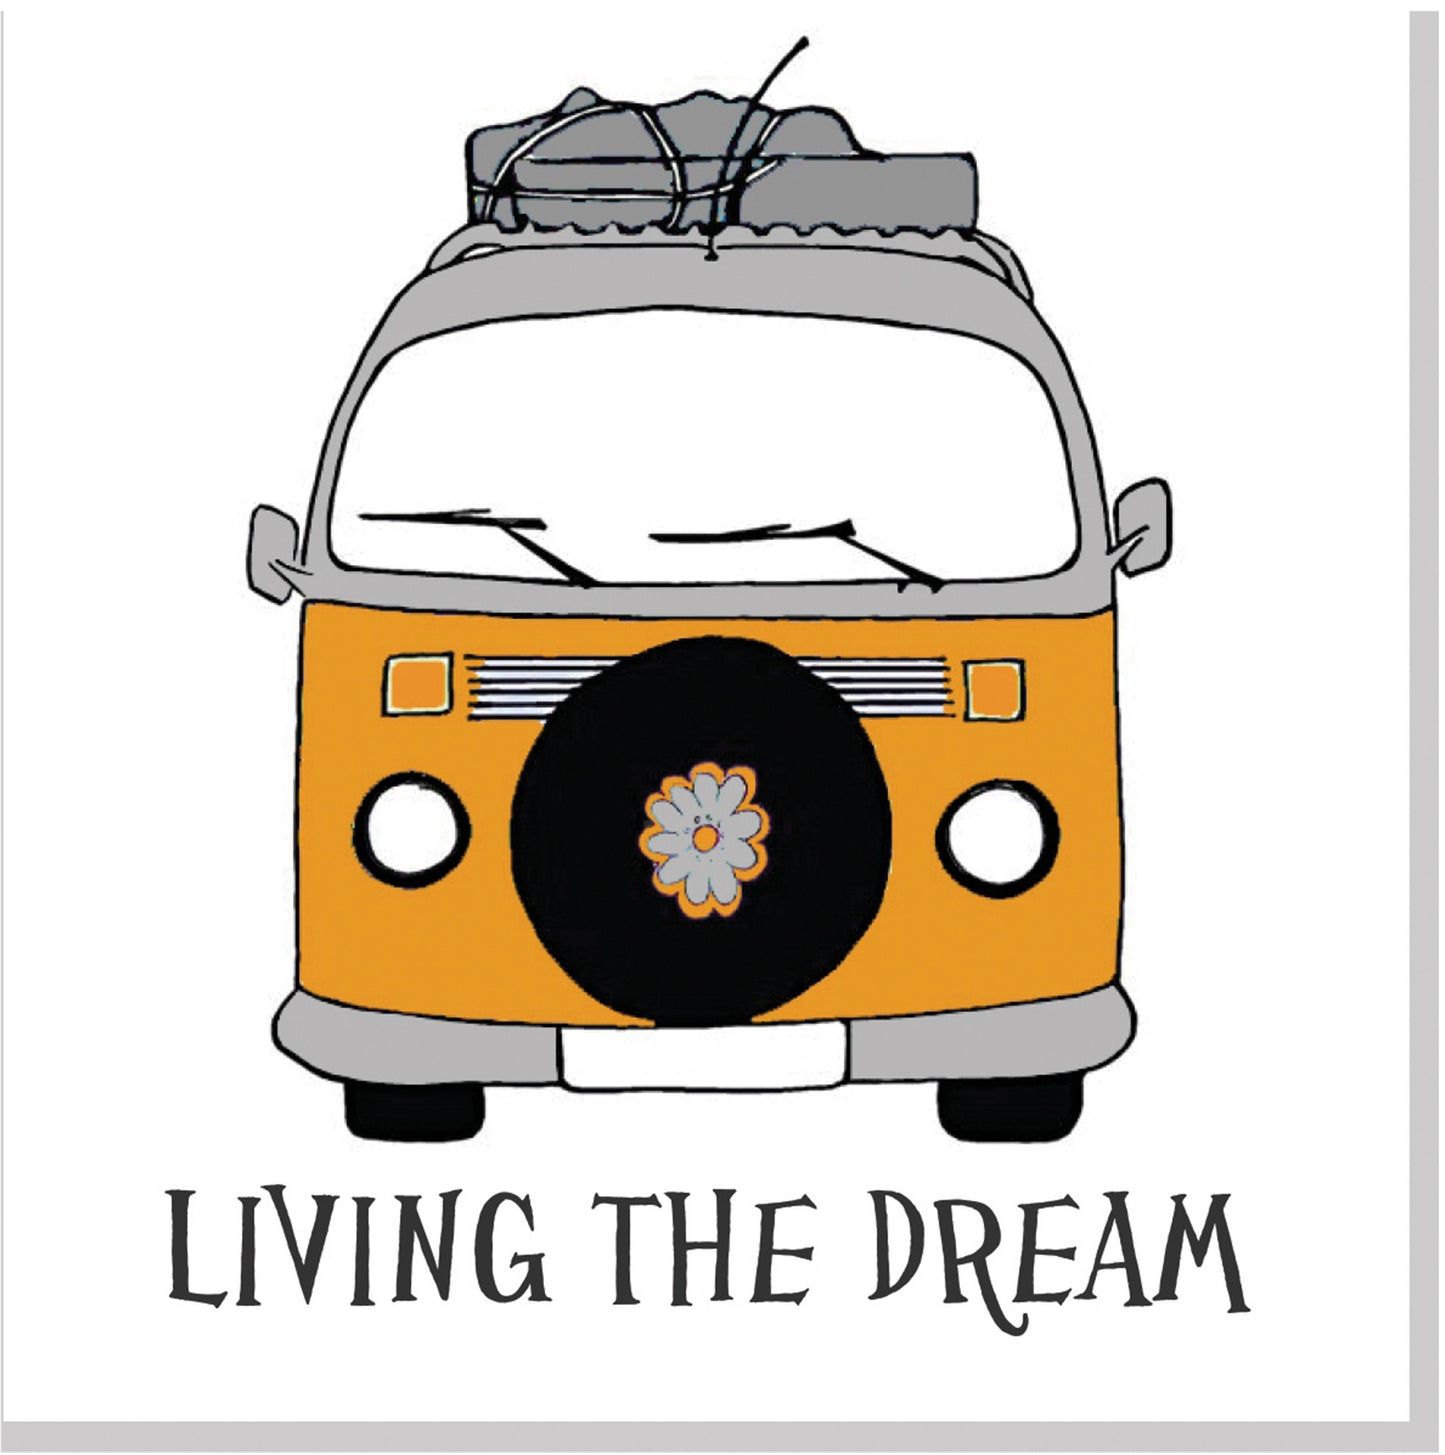 Living the dream camper van square card